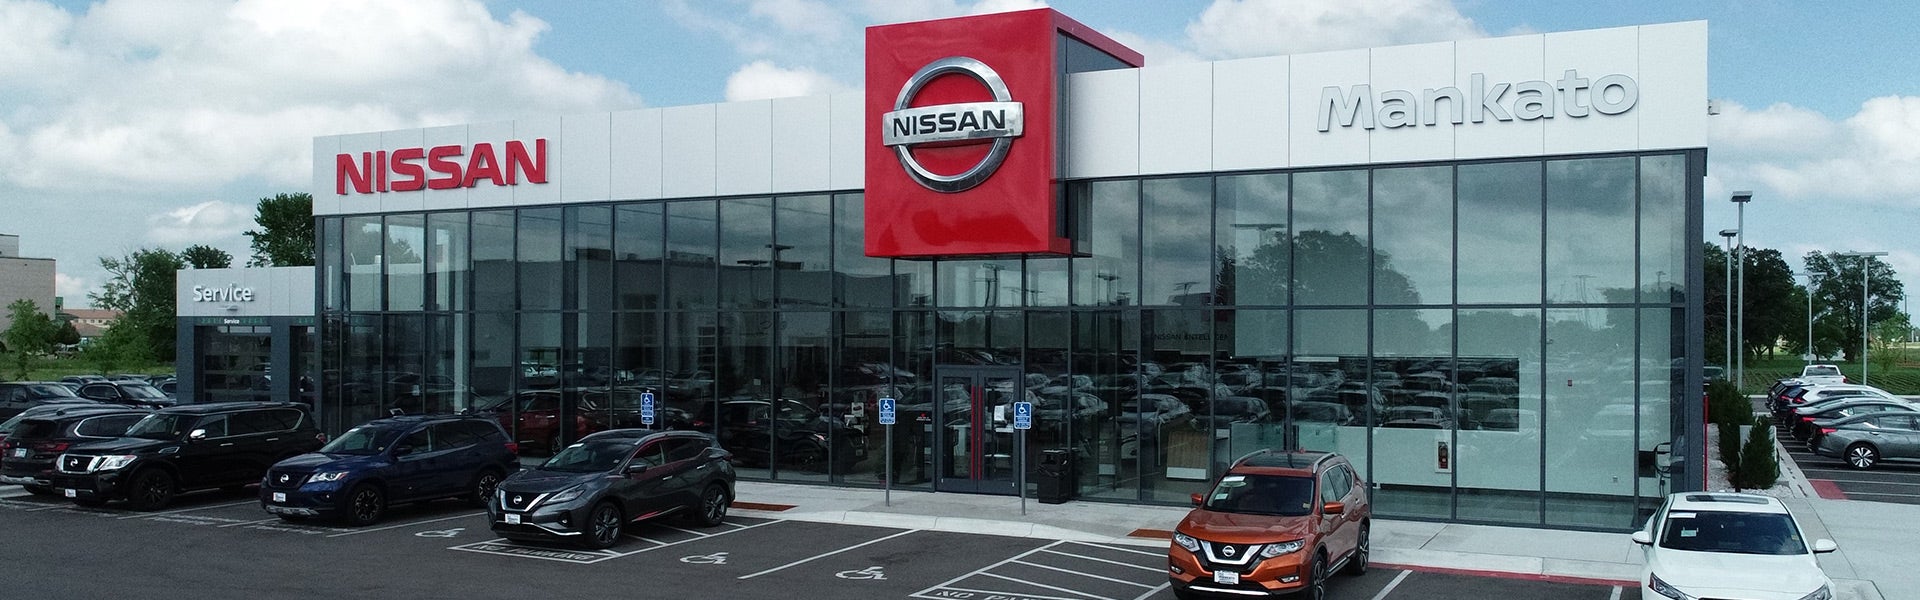 Mankato Nissan Dealership Photo